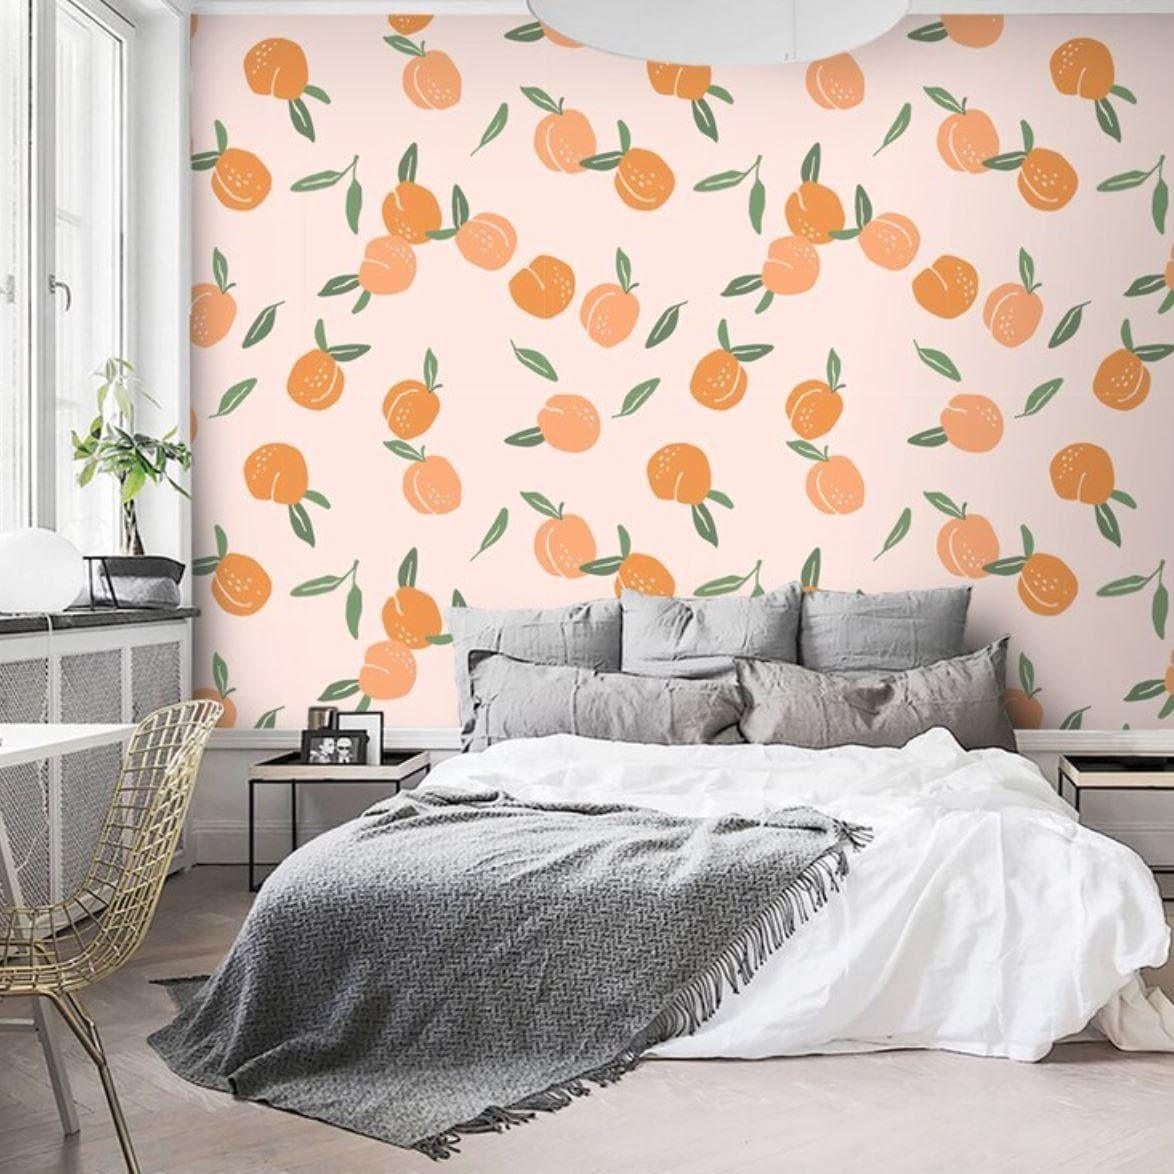 Peach and Orange Fruits Wallpaper - MAIA HOMES